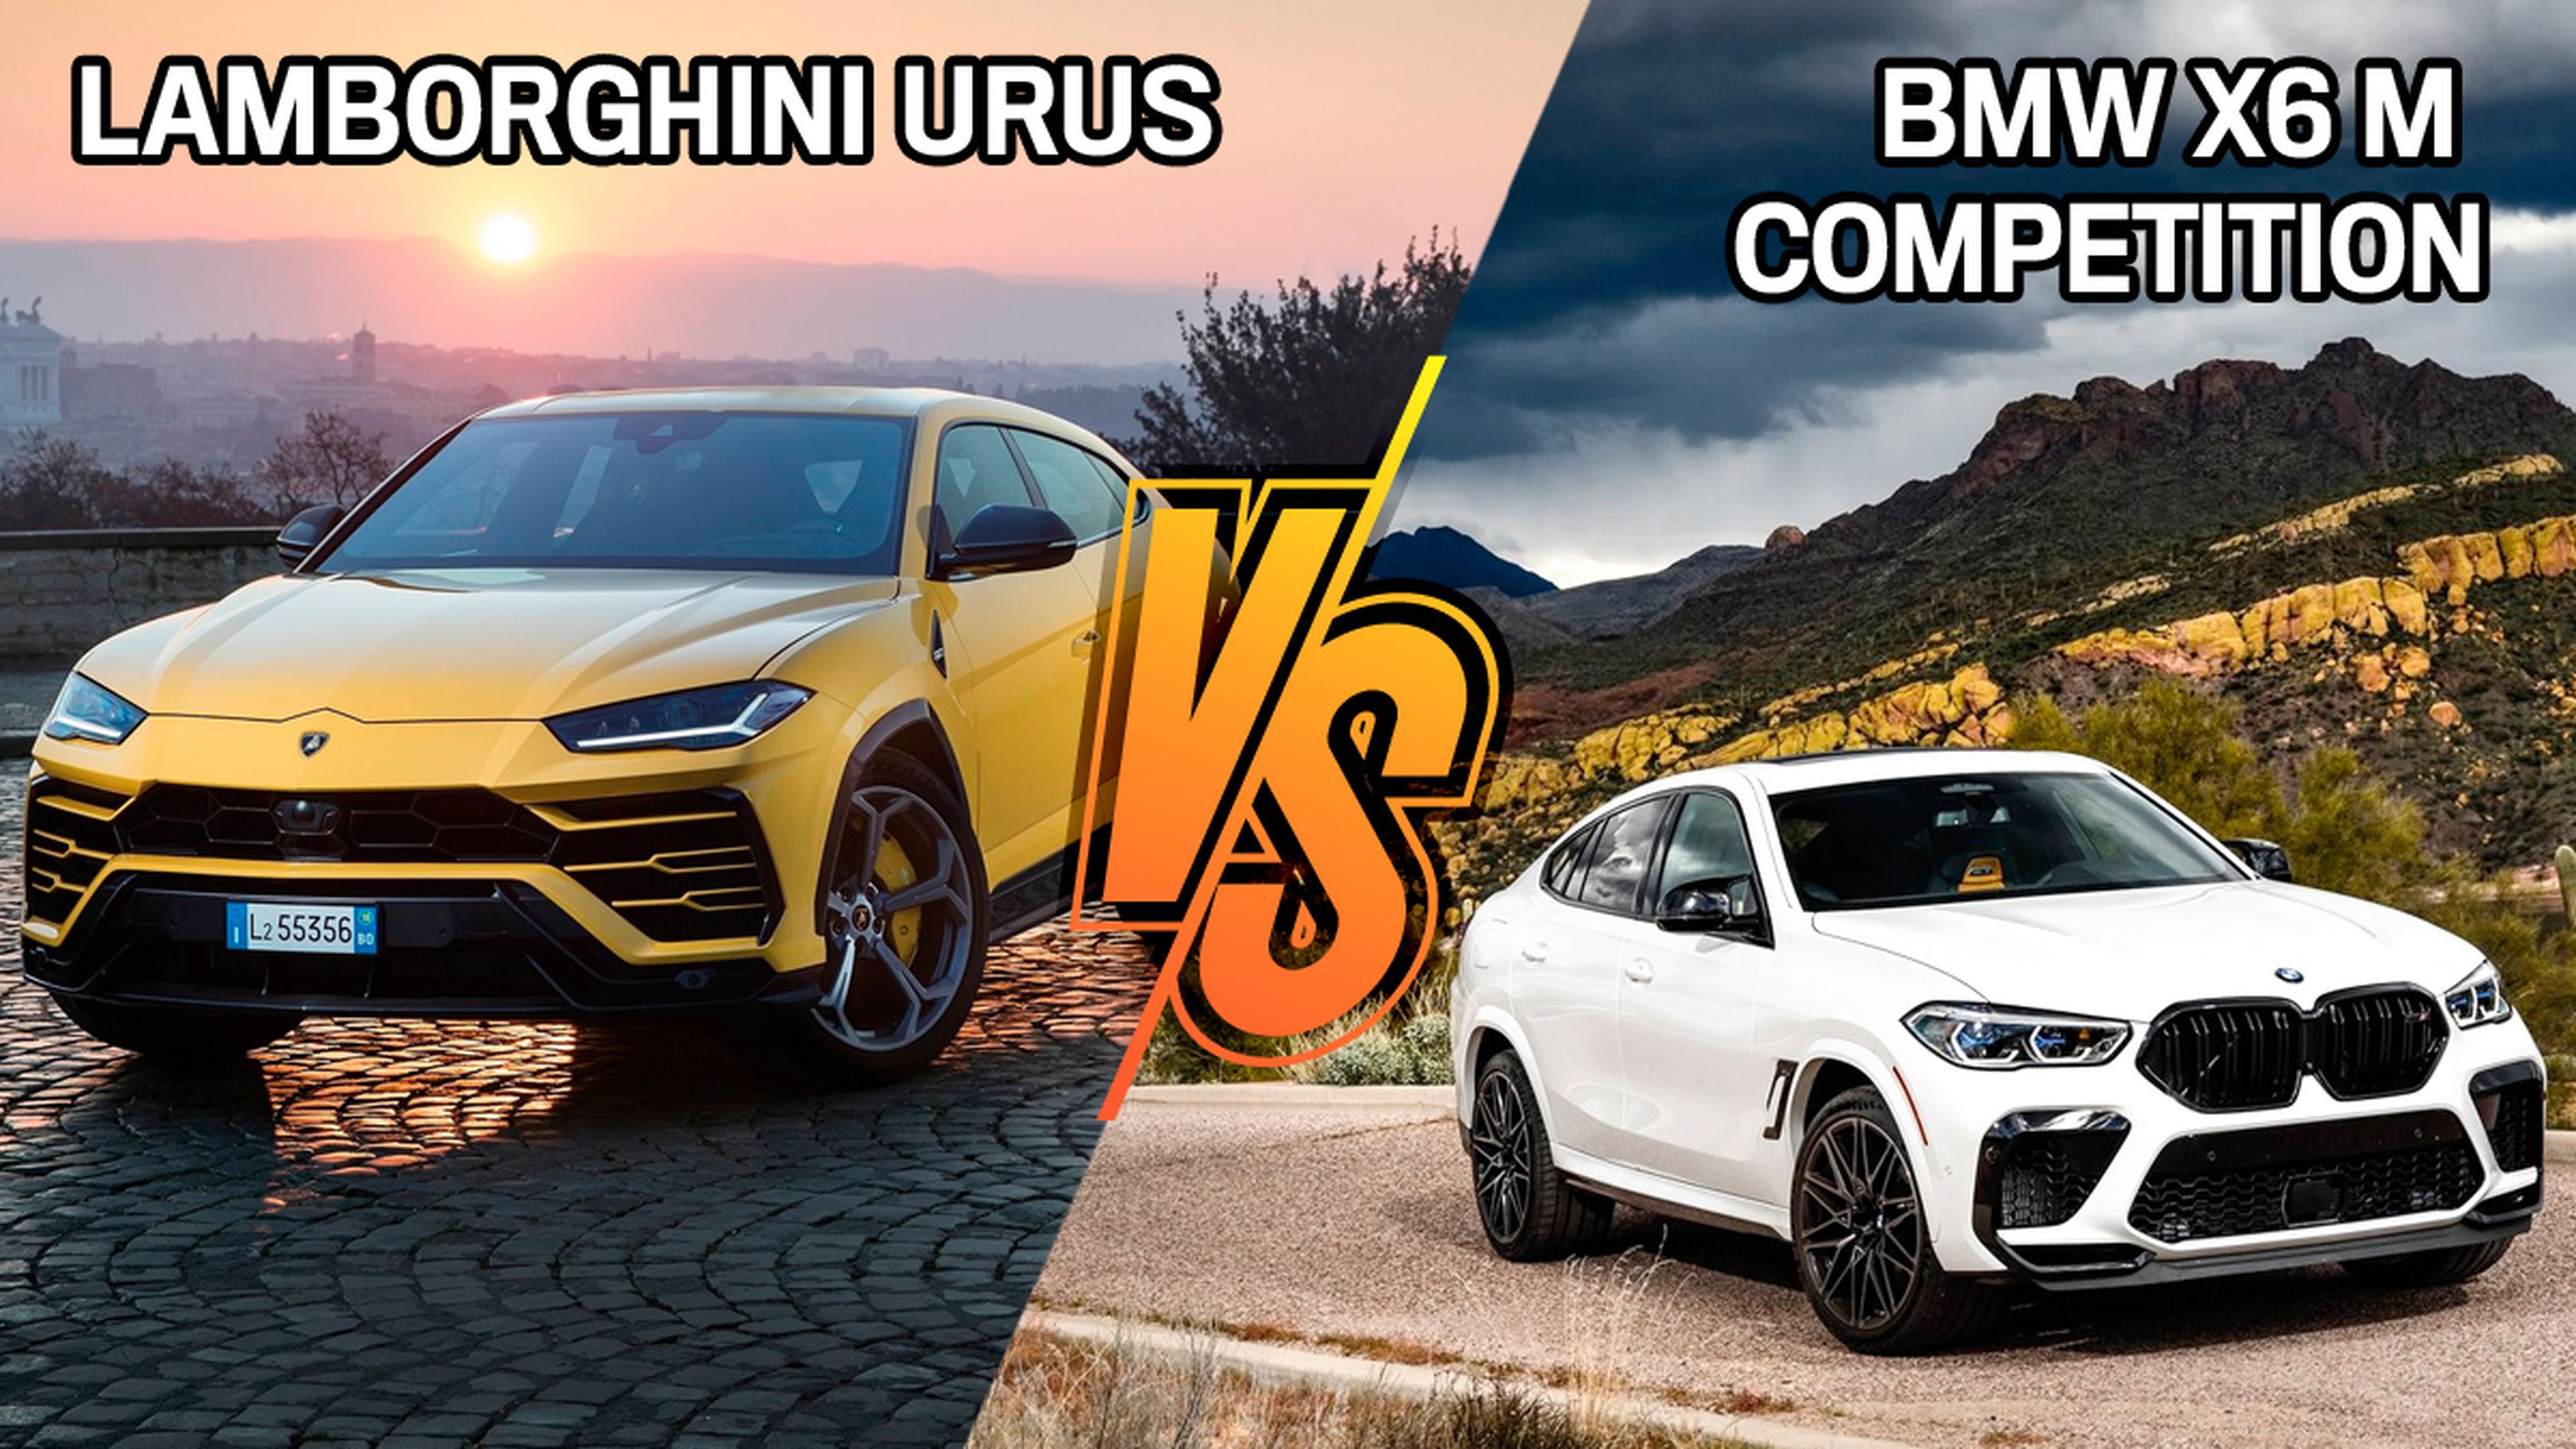 Lamborghini Urus o BMW X6 M Competition, ¿cuál es mejor?